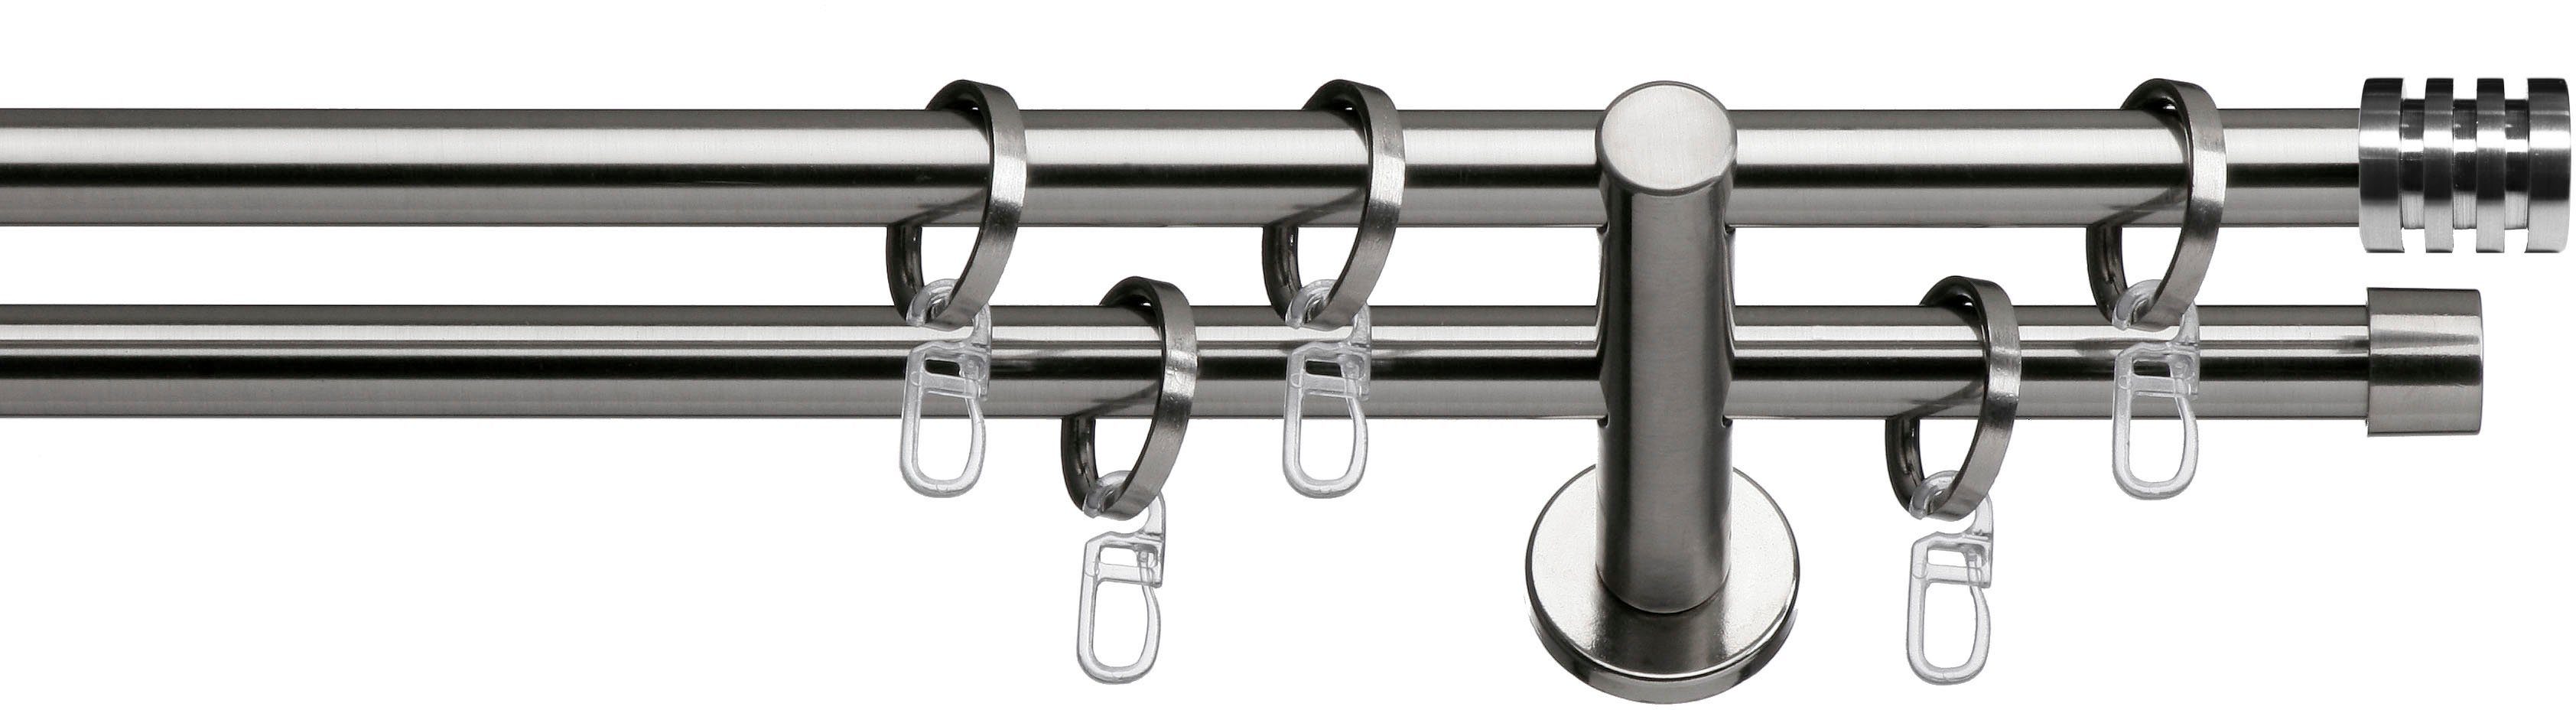 Gardinenstange Valencia, indeko, Ø 16 mm, 2-läufig, Fixmaß, verschraubt,  Stahl, Komplett-Set inkl. Ringen und Montagematerial